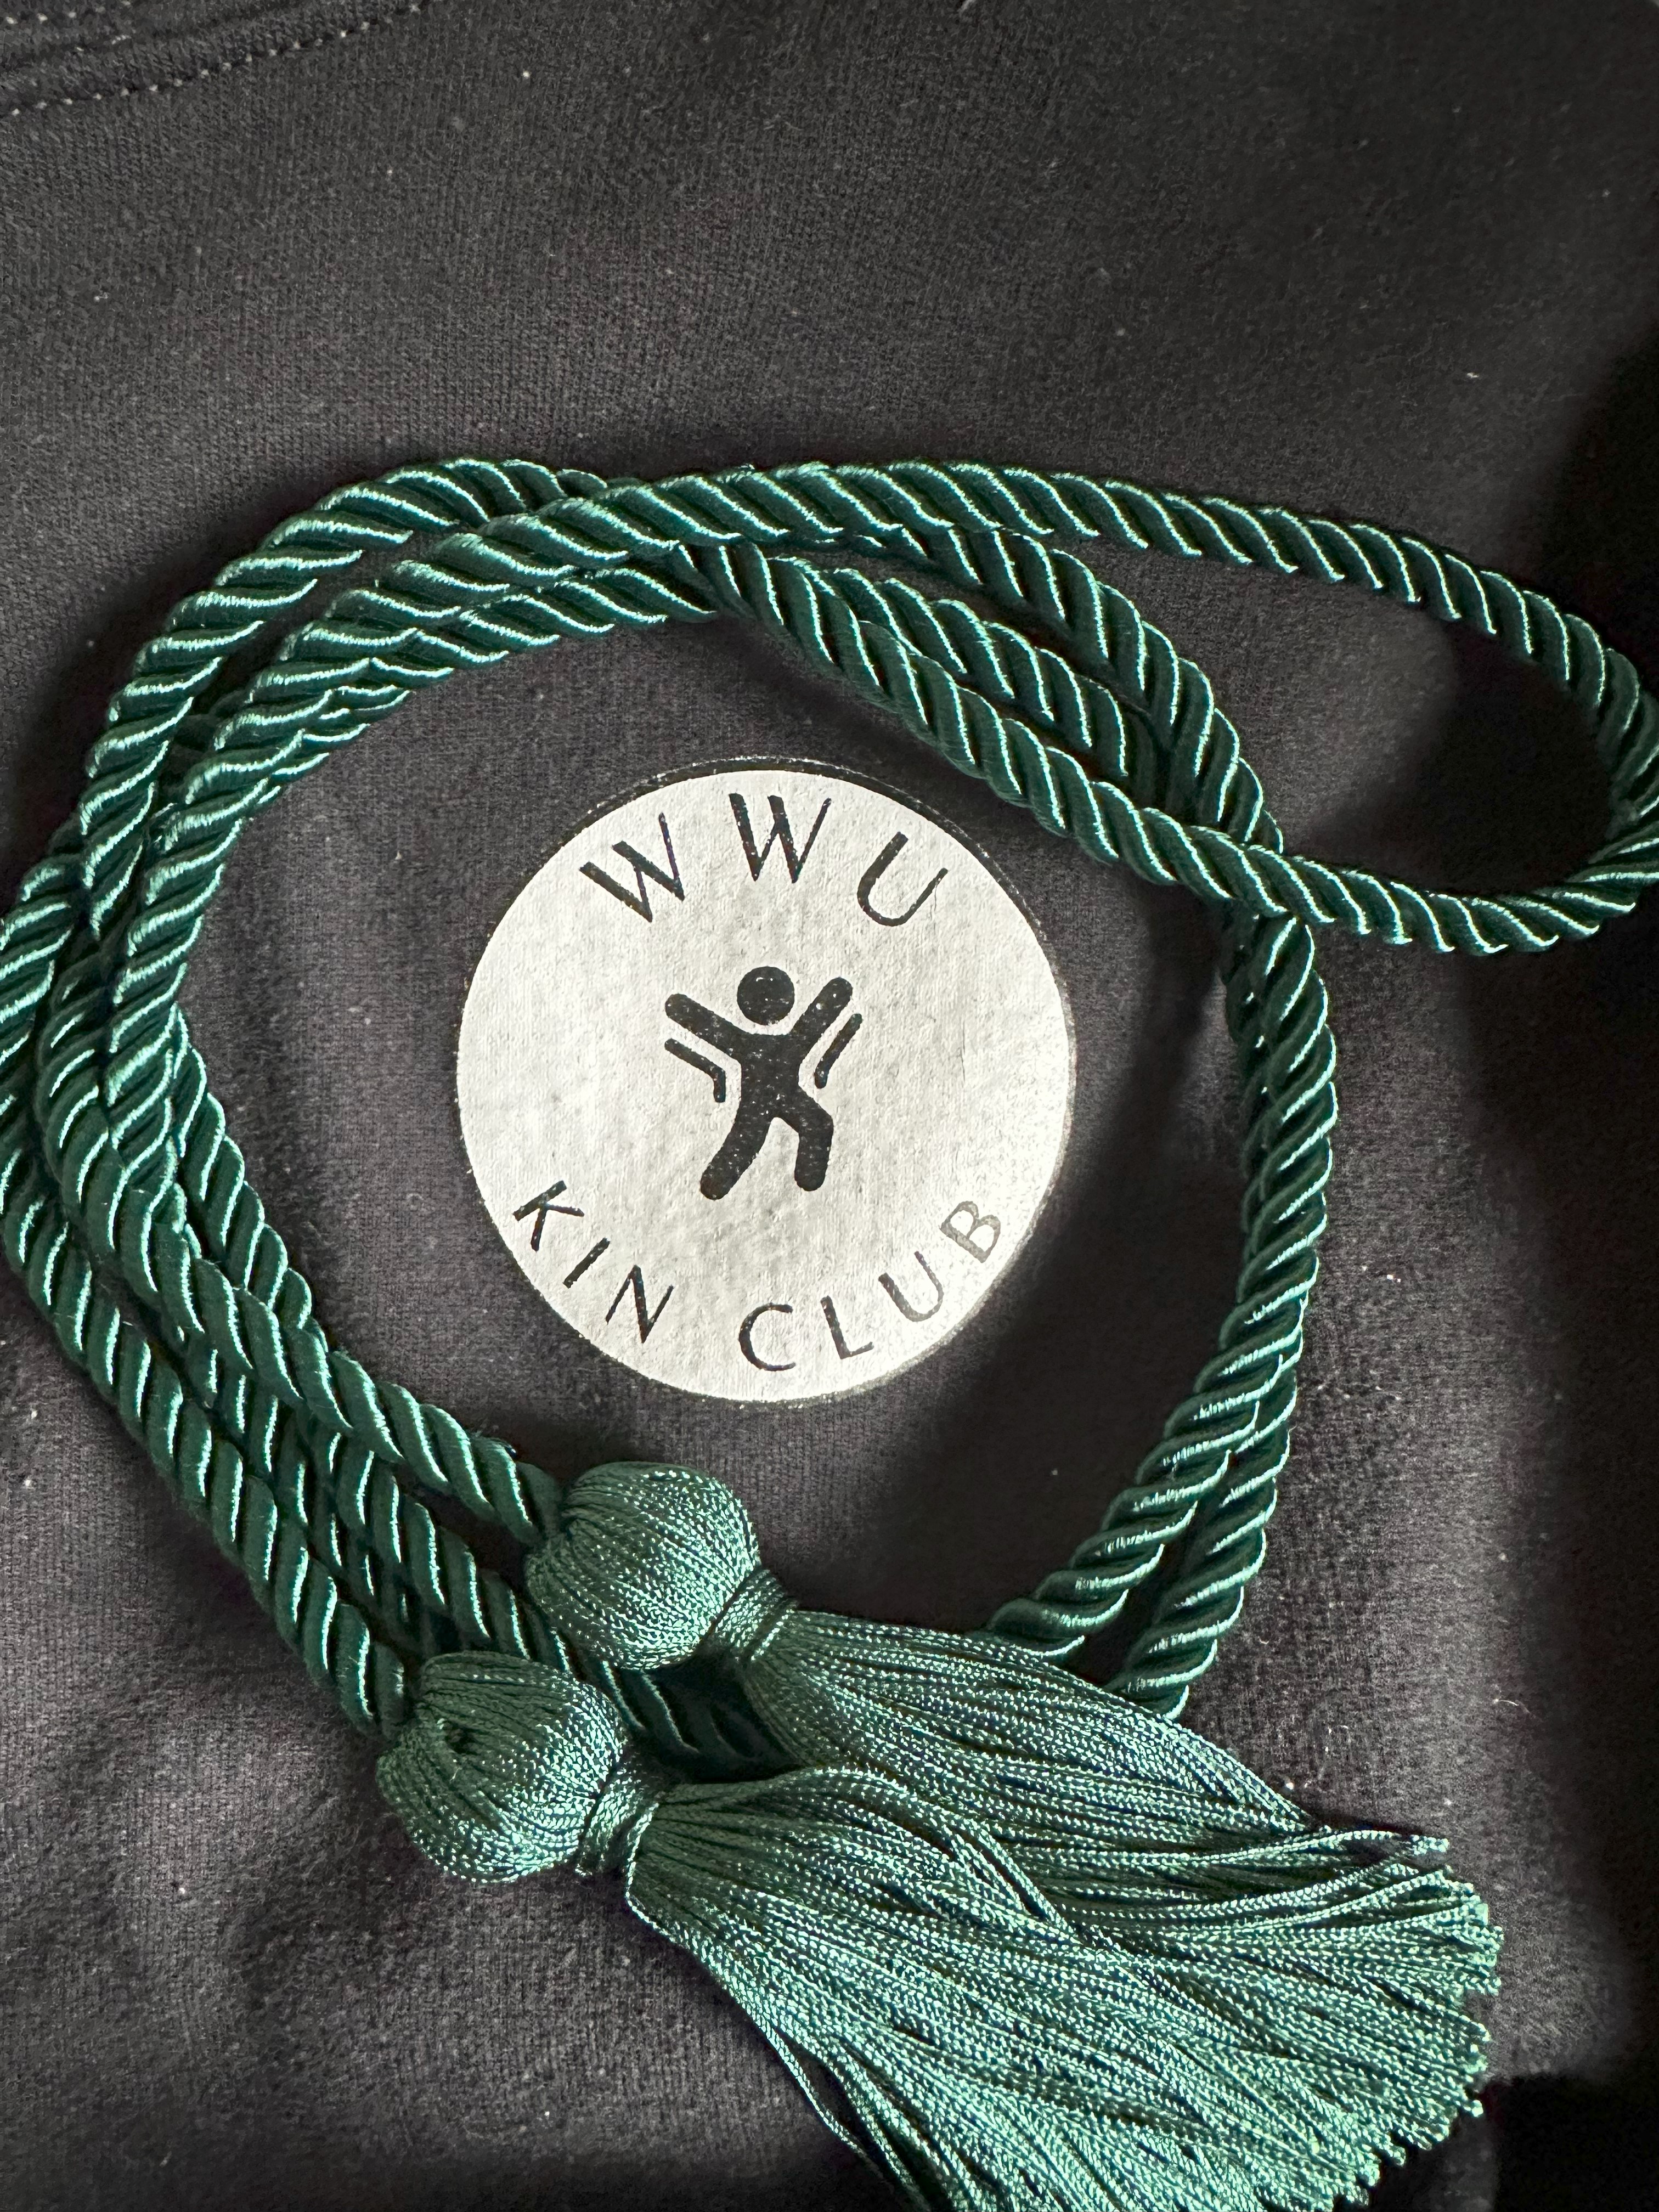 Dark green cord and WWU Kin Club sweatshirt